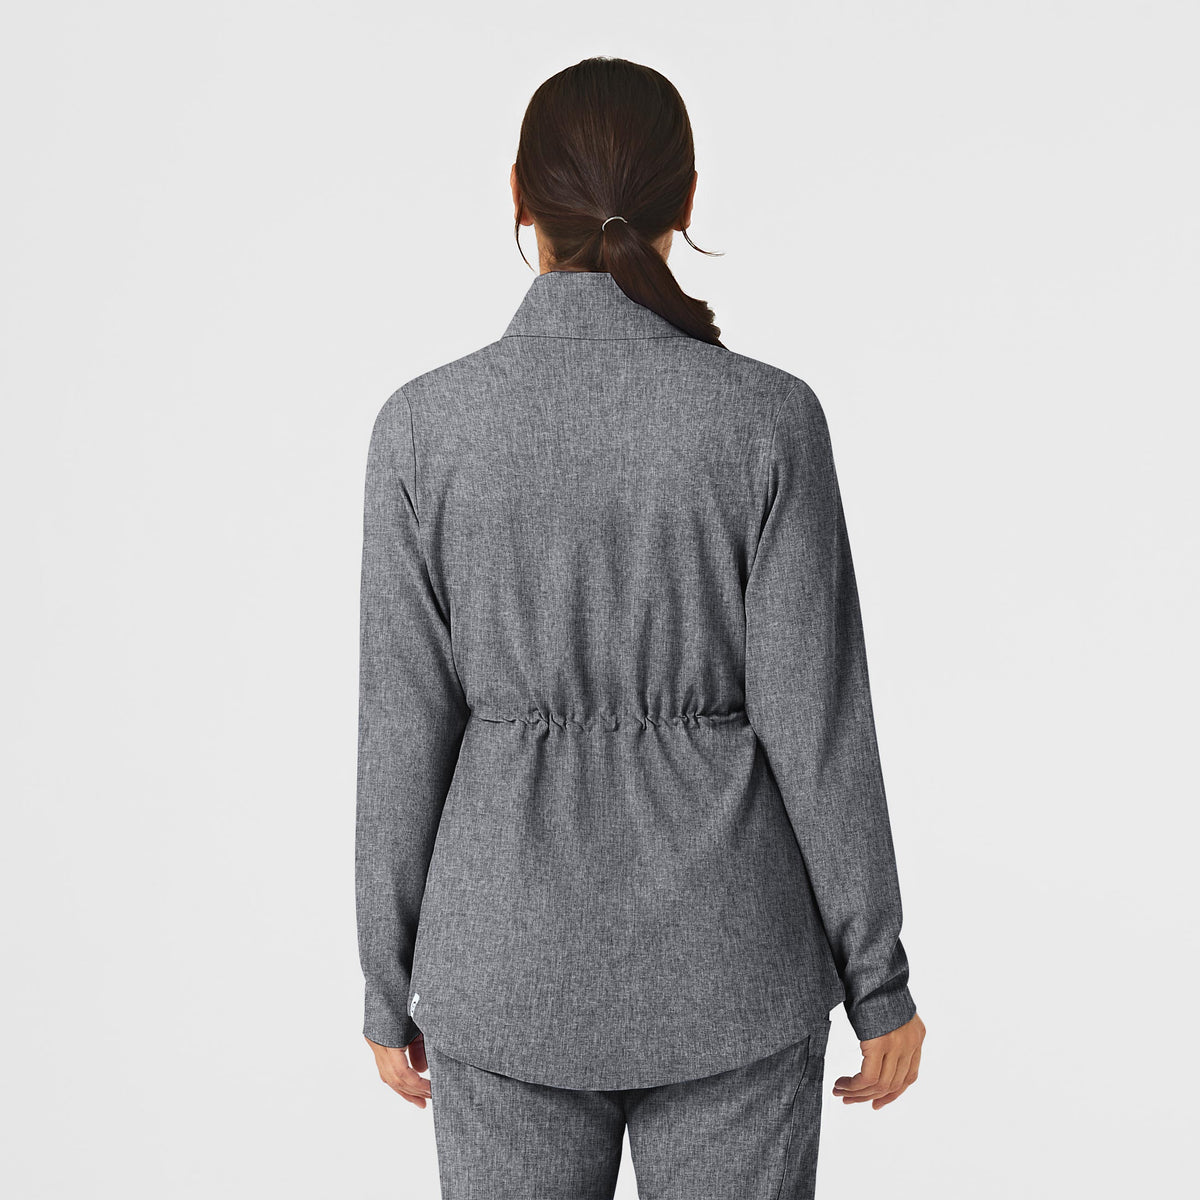 Wink RENEW Women's Convertible Hood Fashion Jacket - Grey Heather Back